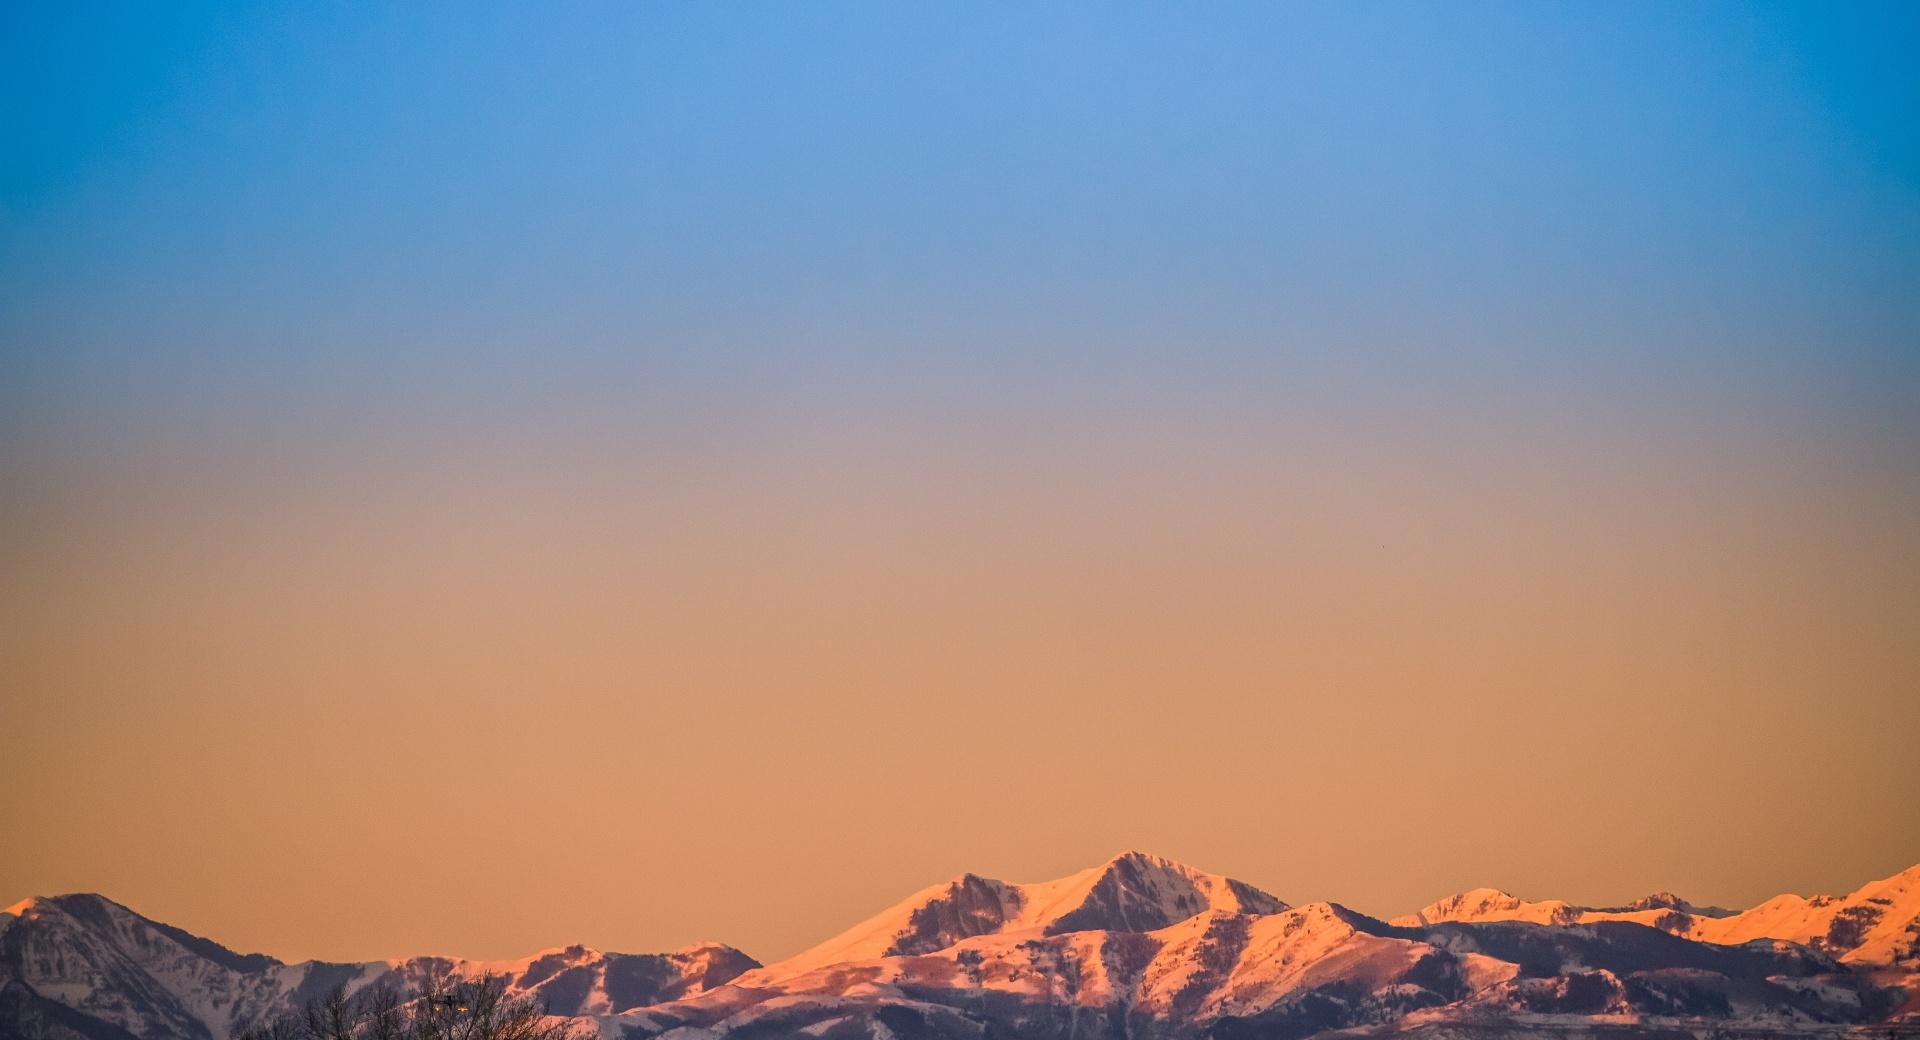 Salt Lake City Mountains wallpapers HD quality